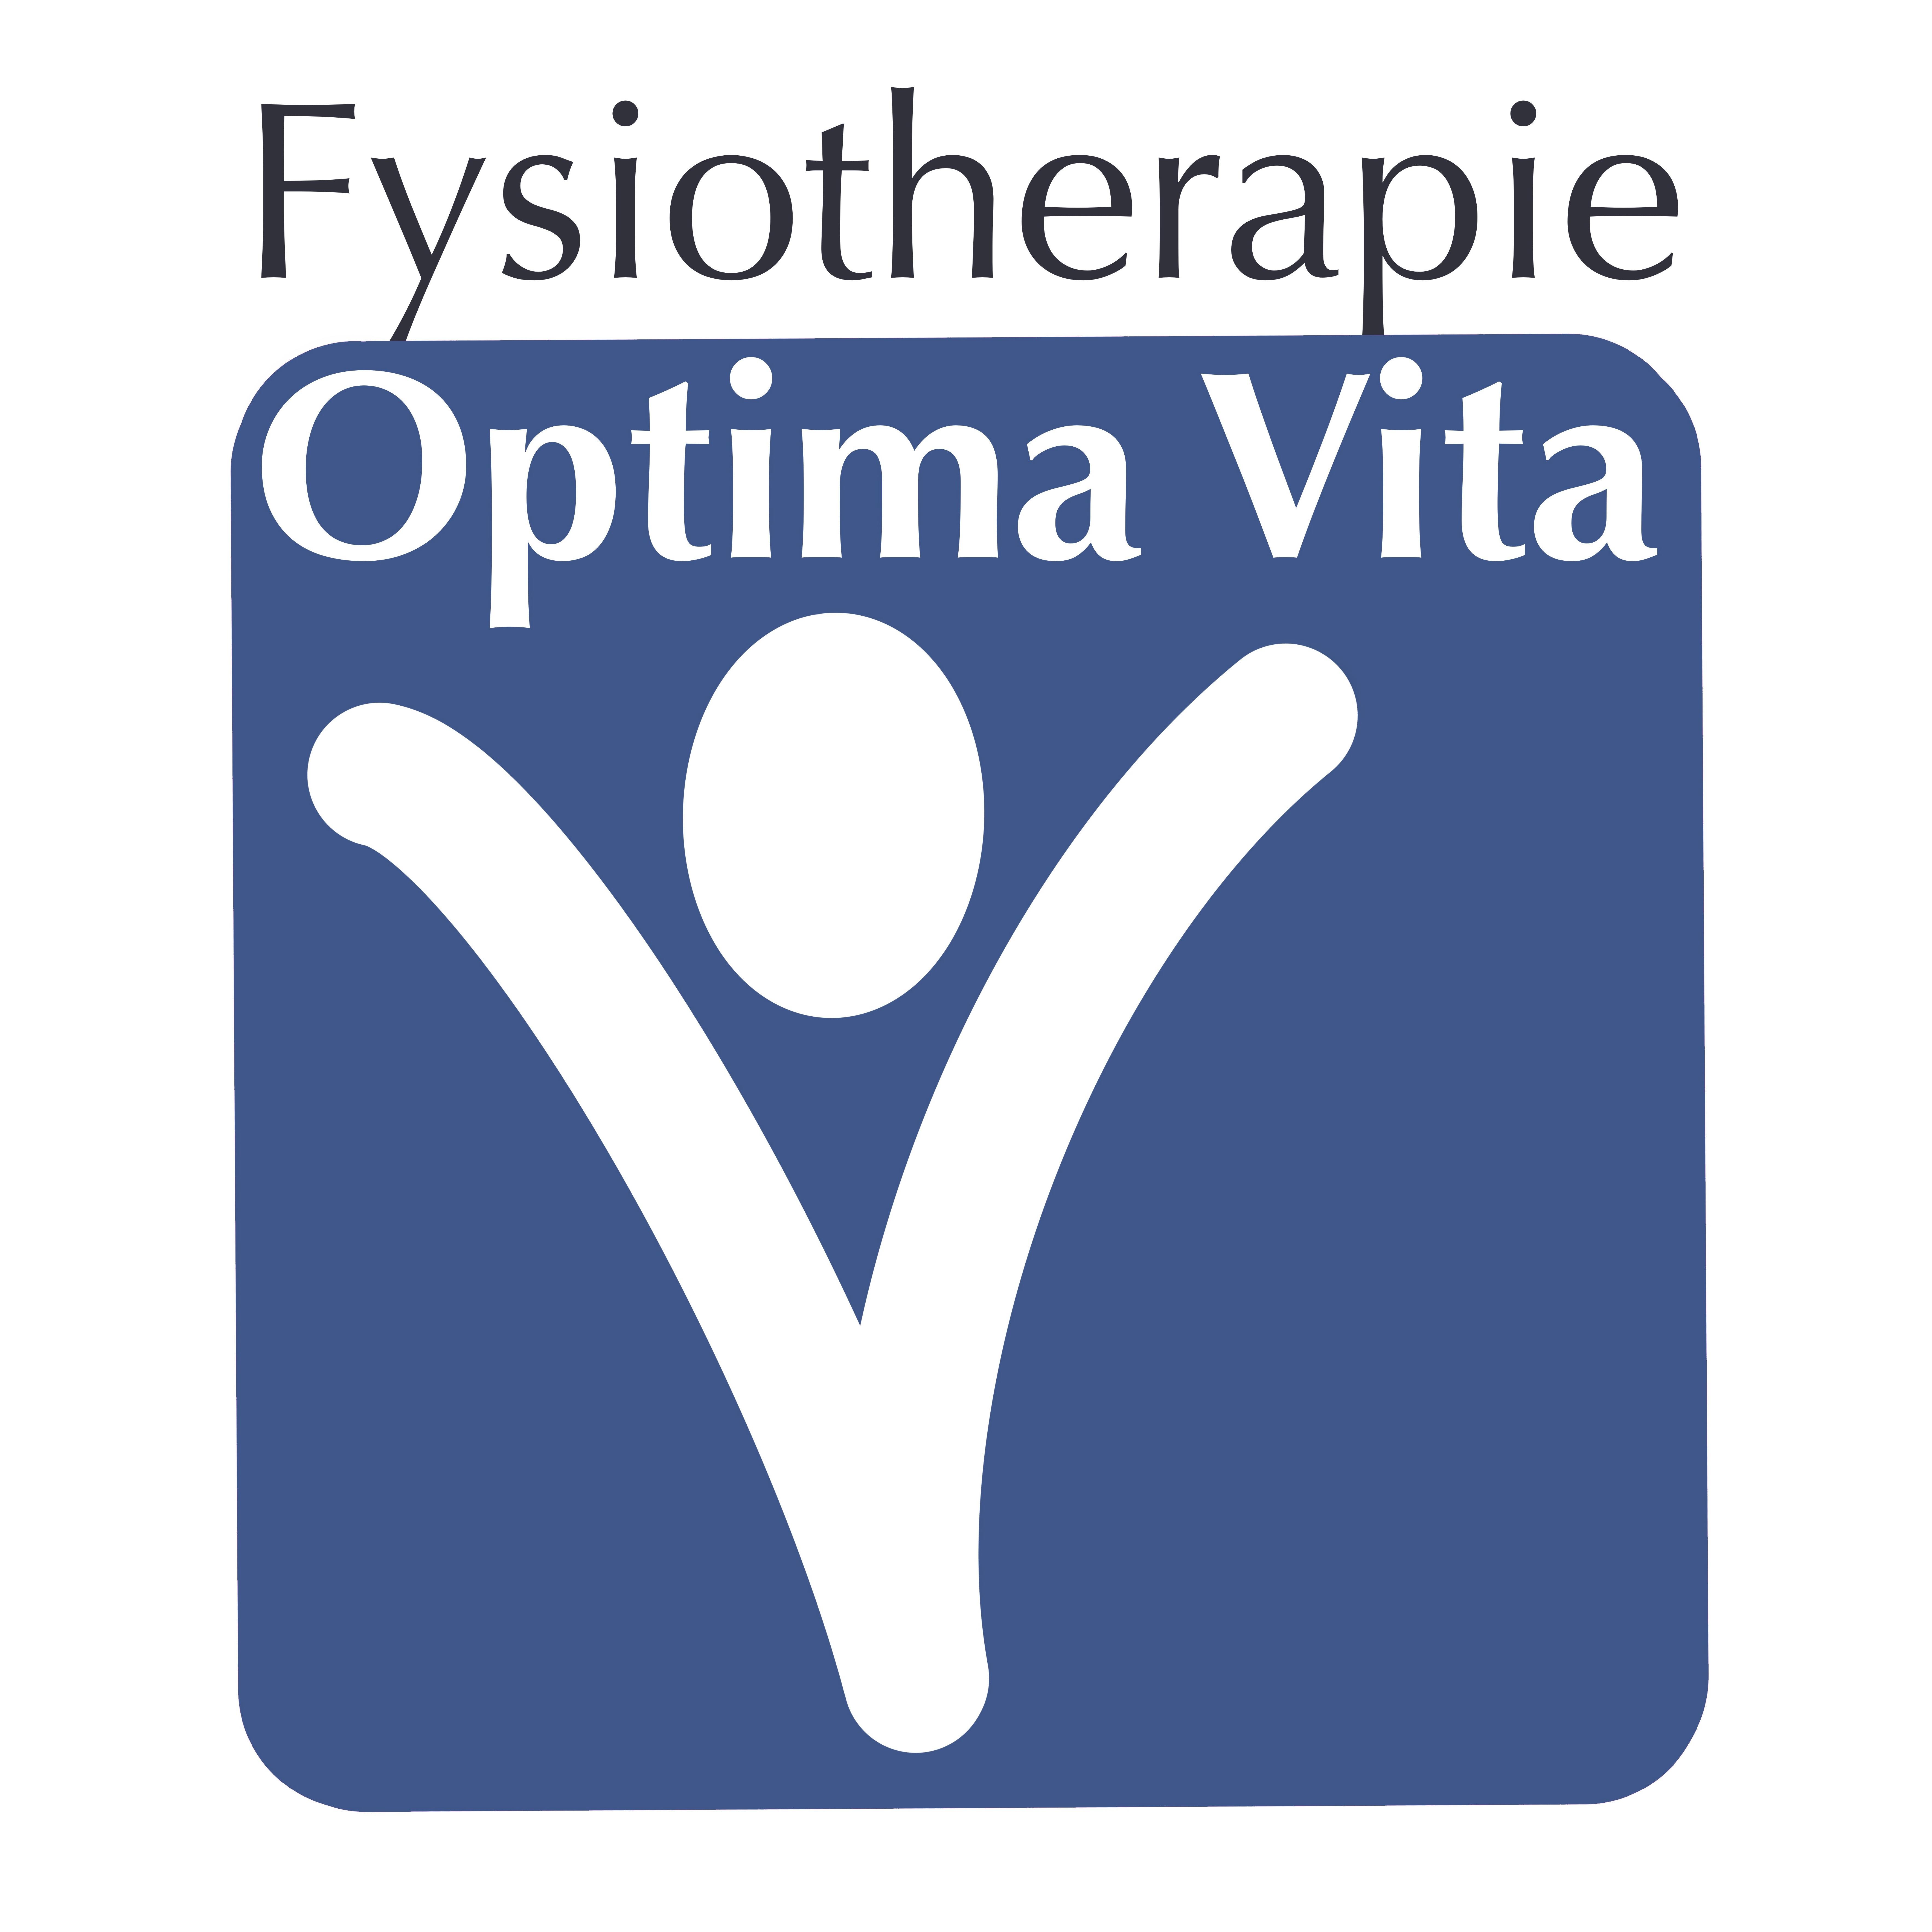 Fysiotherapie Optima Vita Logo